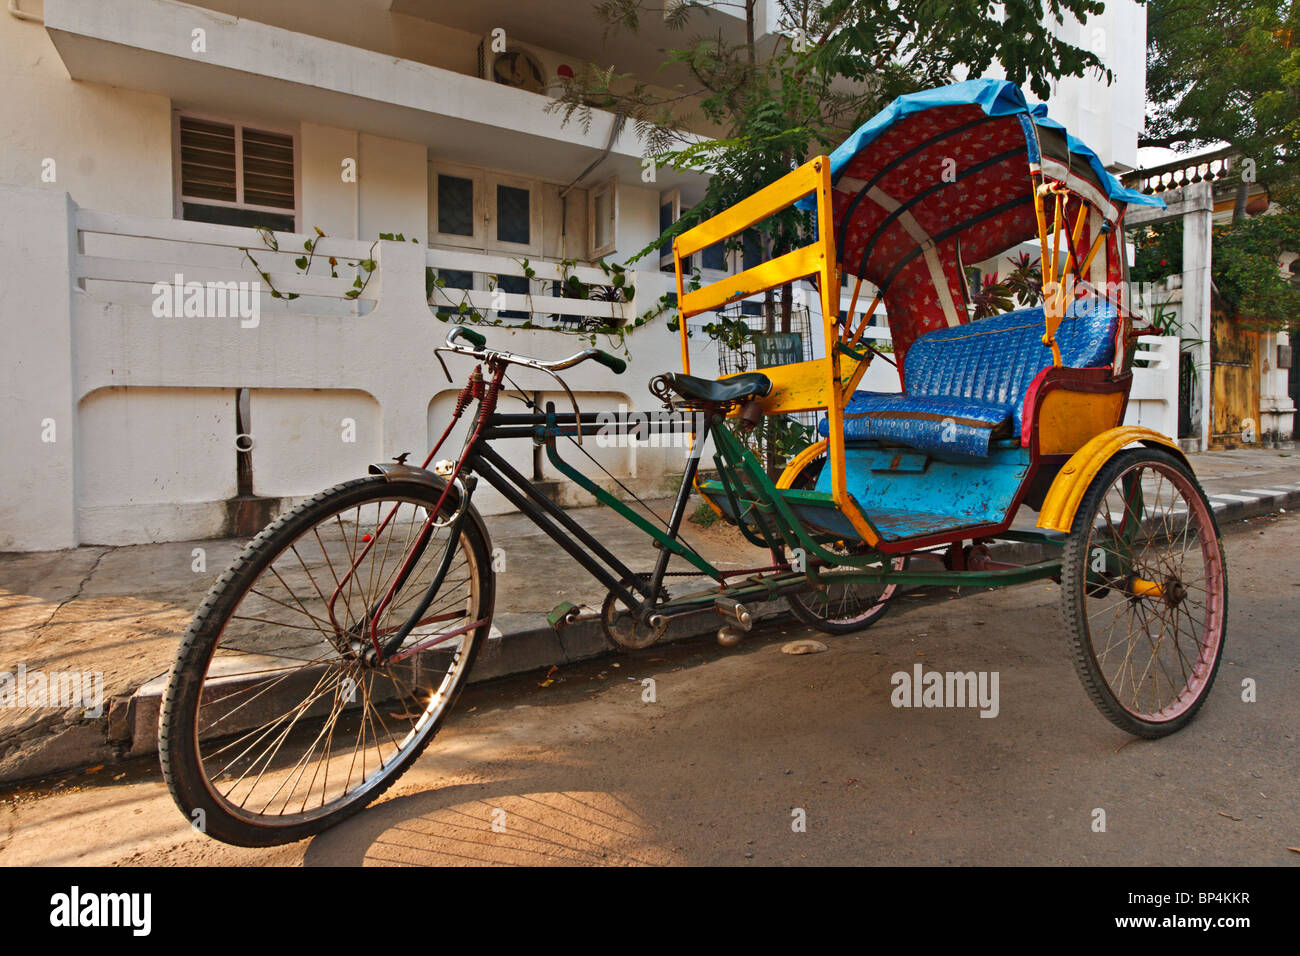 Auto rickshaw moving on the road, Chennai, Tamil Nadu, India Stock